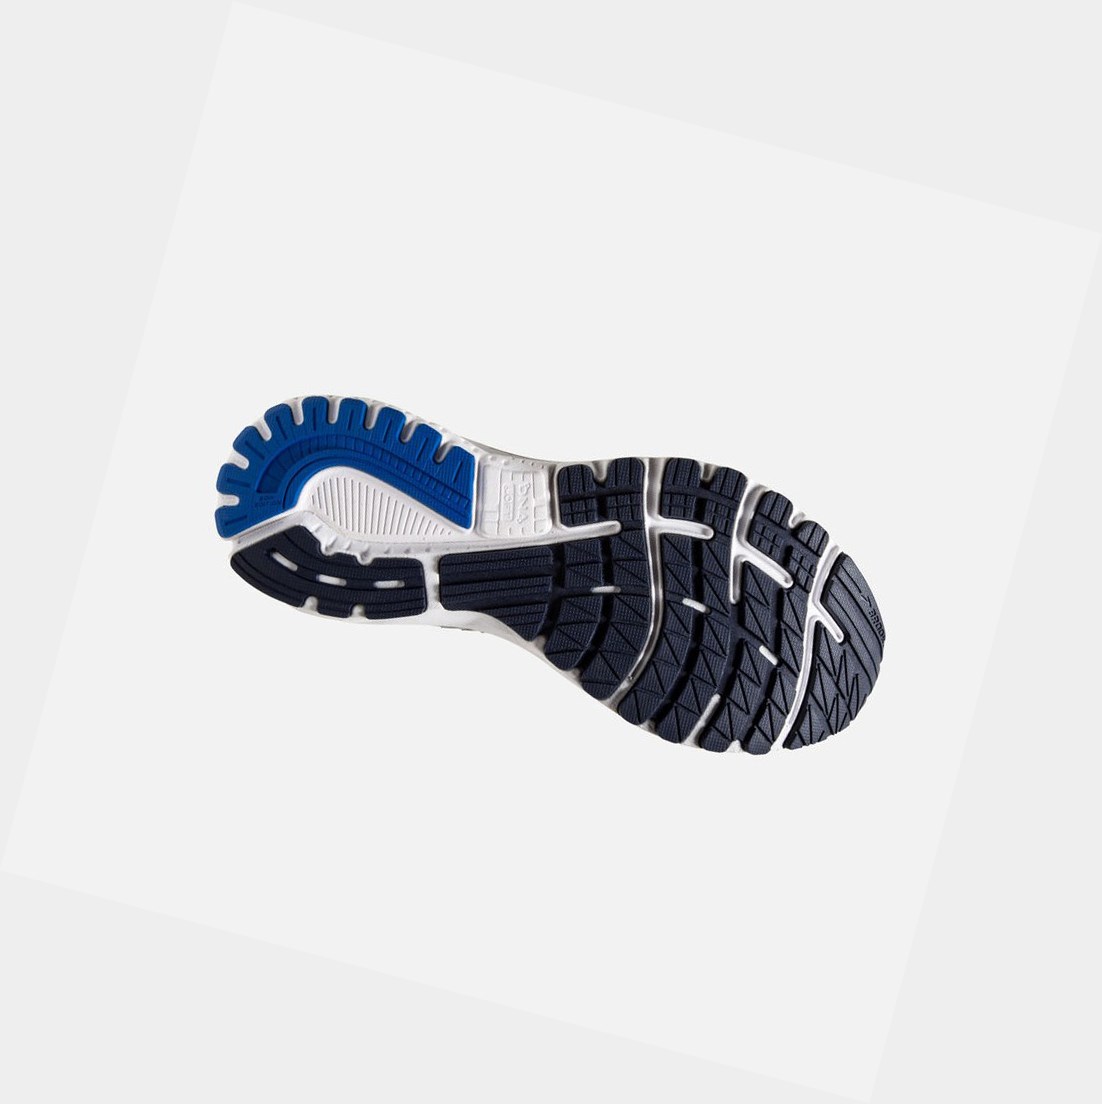 Brooks Adrenaline GTS 20 Men's Walking Shoes Grey / Blue / Navy | XQVG-56340